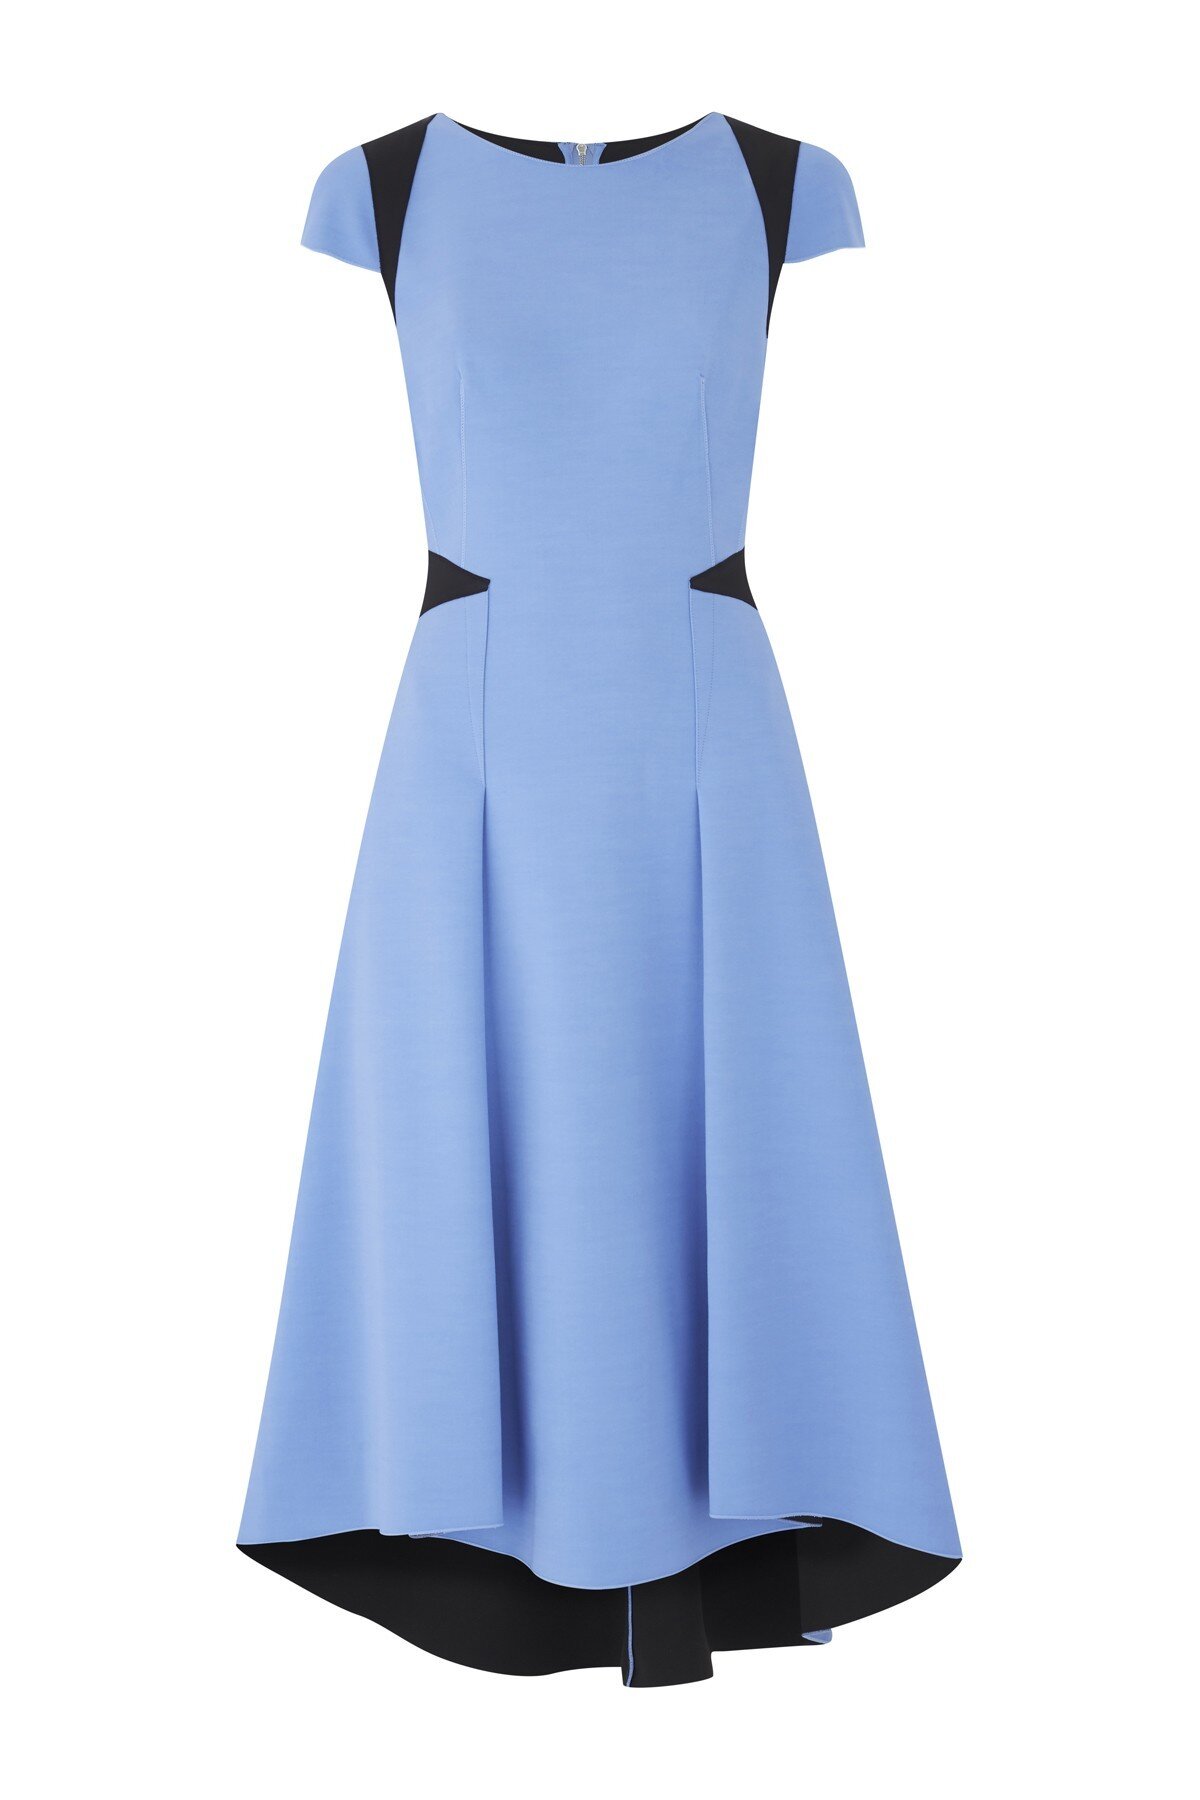 Amanda Wakeley Tilt Midi Dress in China Blue.jpg